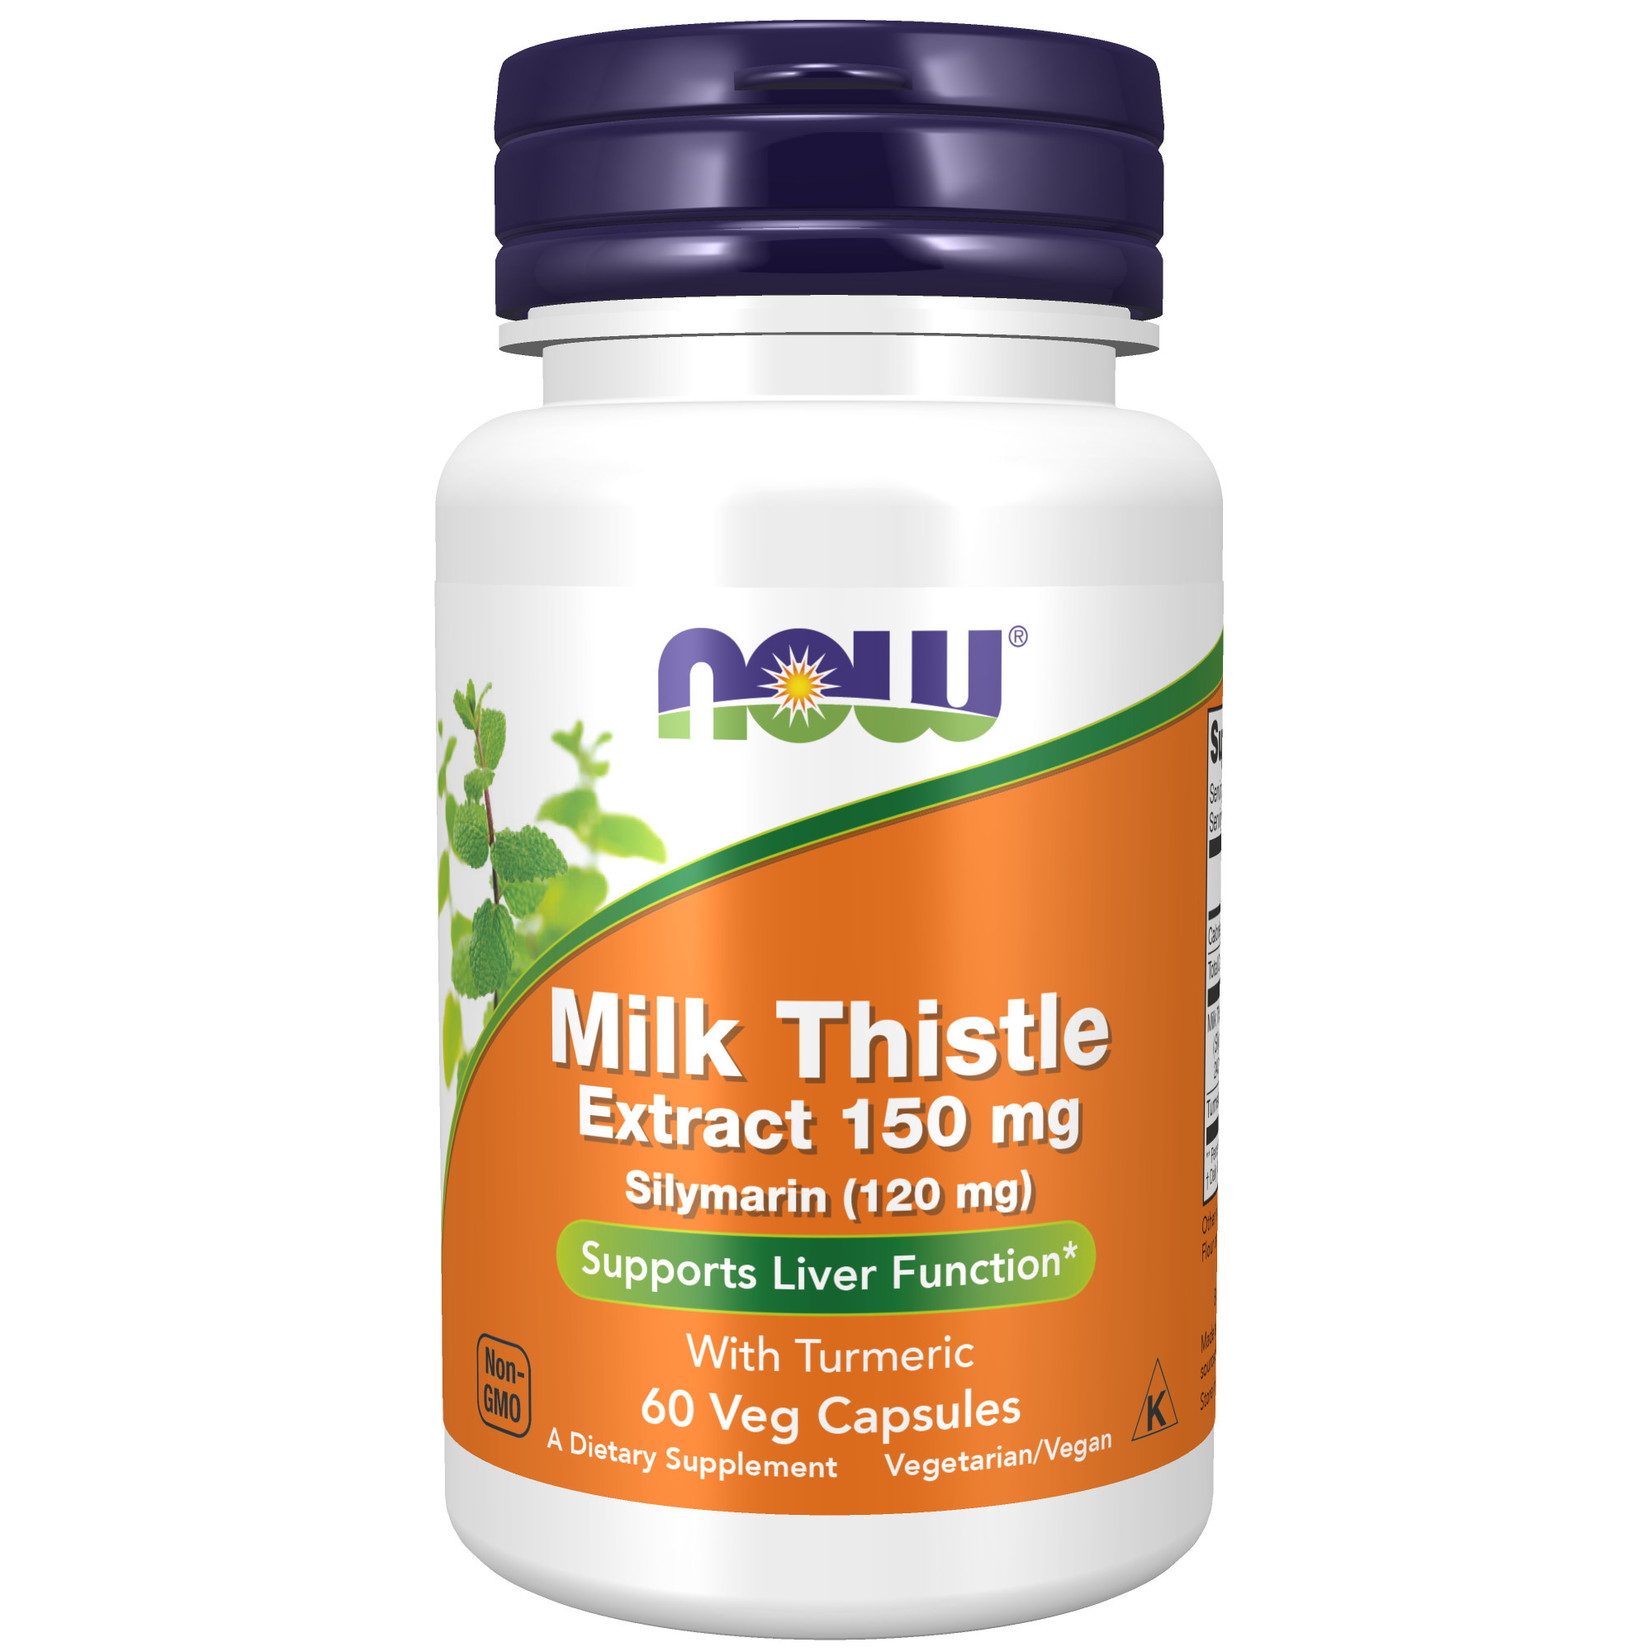 Now Now - Milk Thistle Extract 150 mg - 60 Capsules